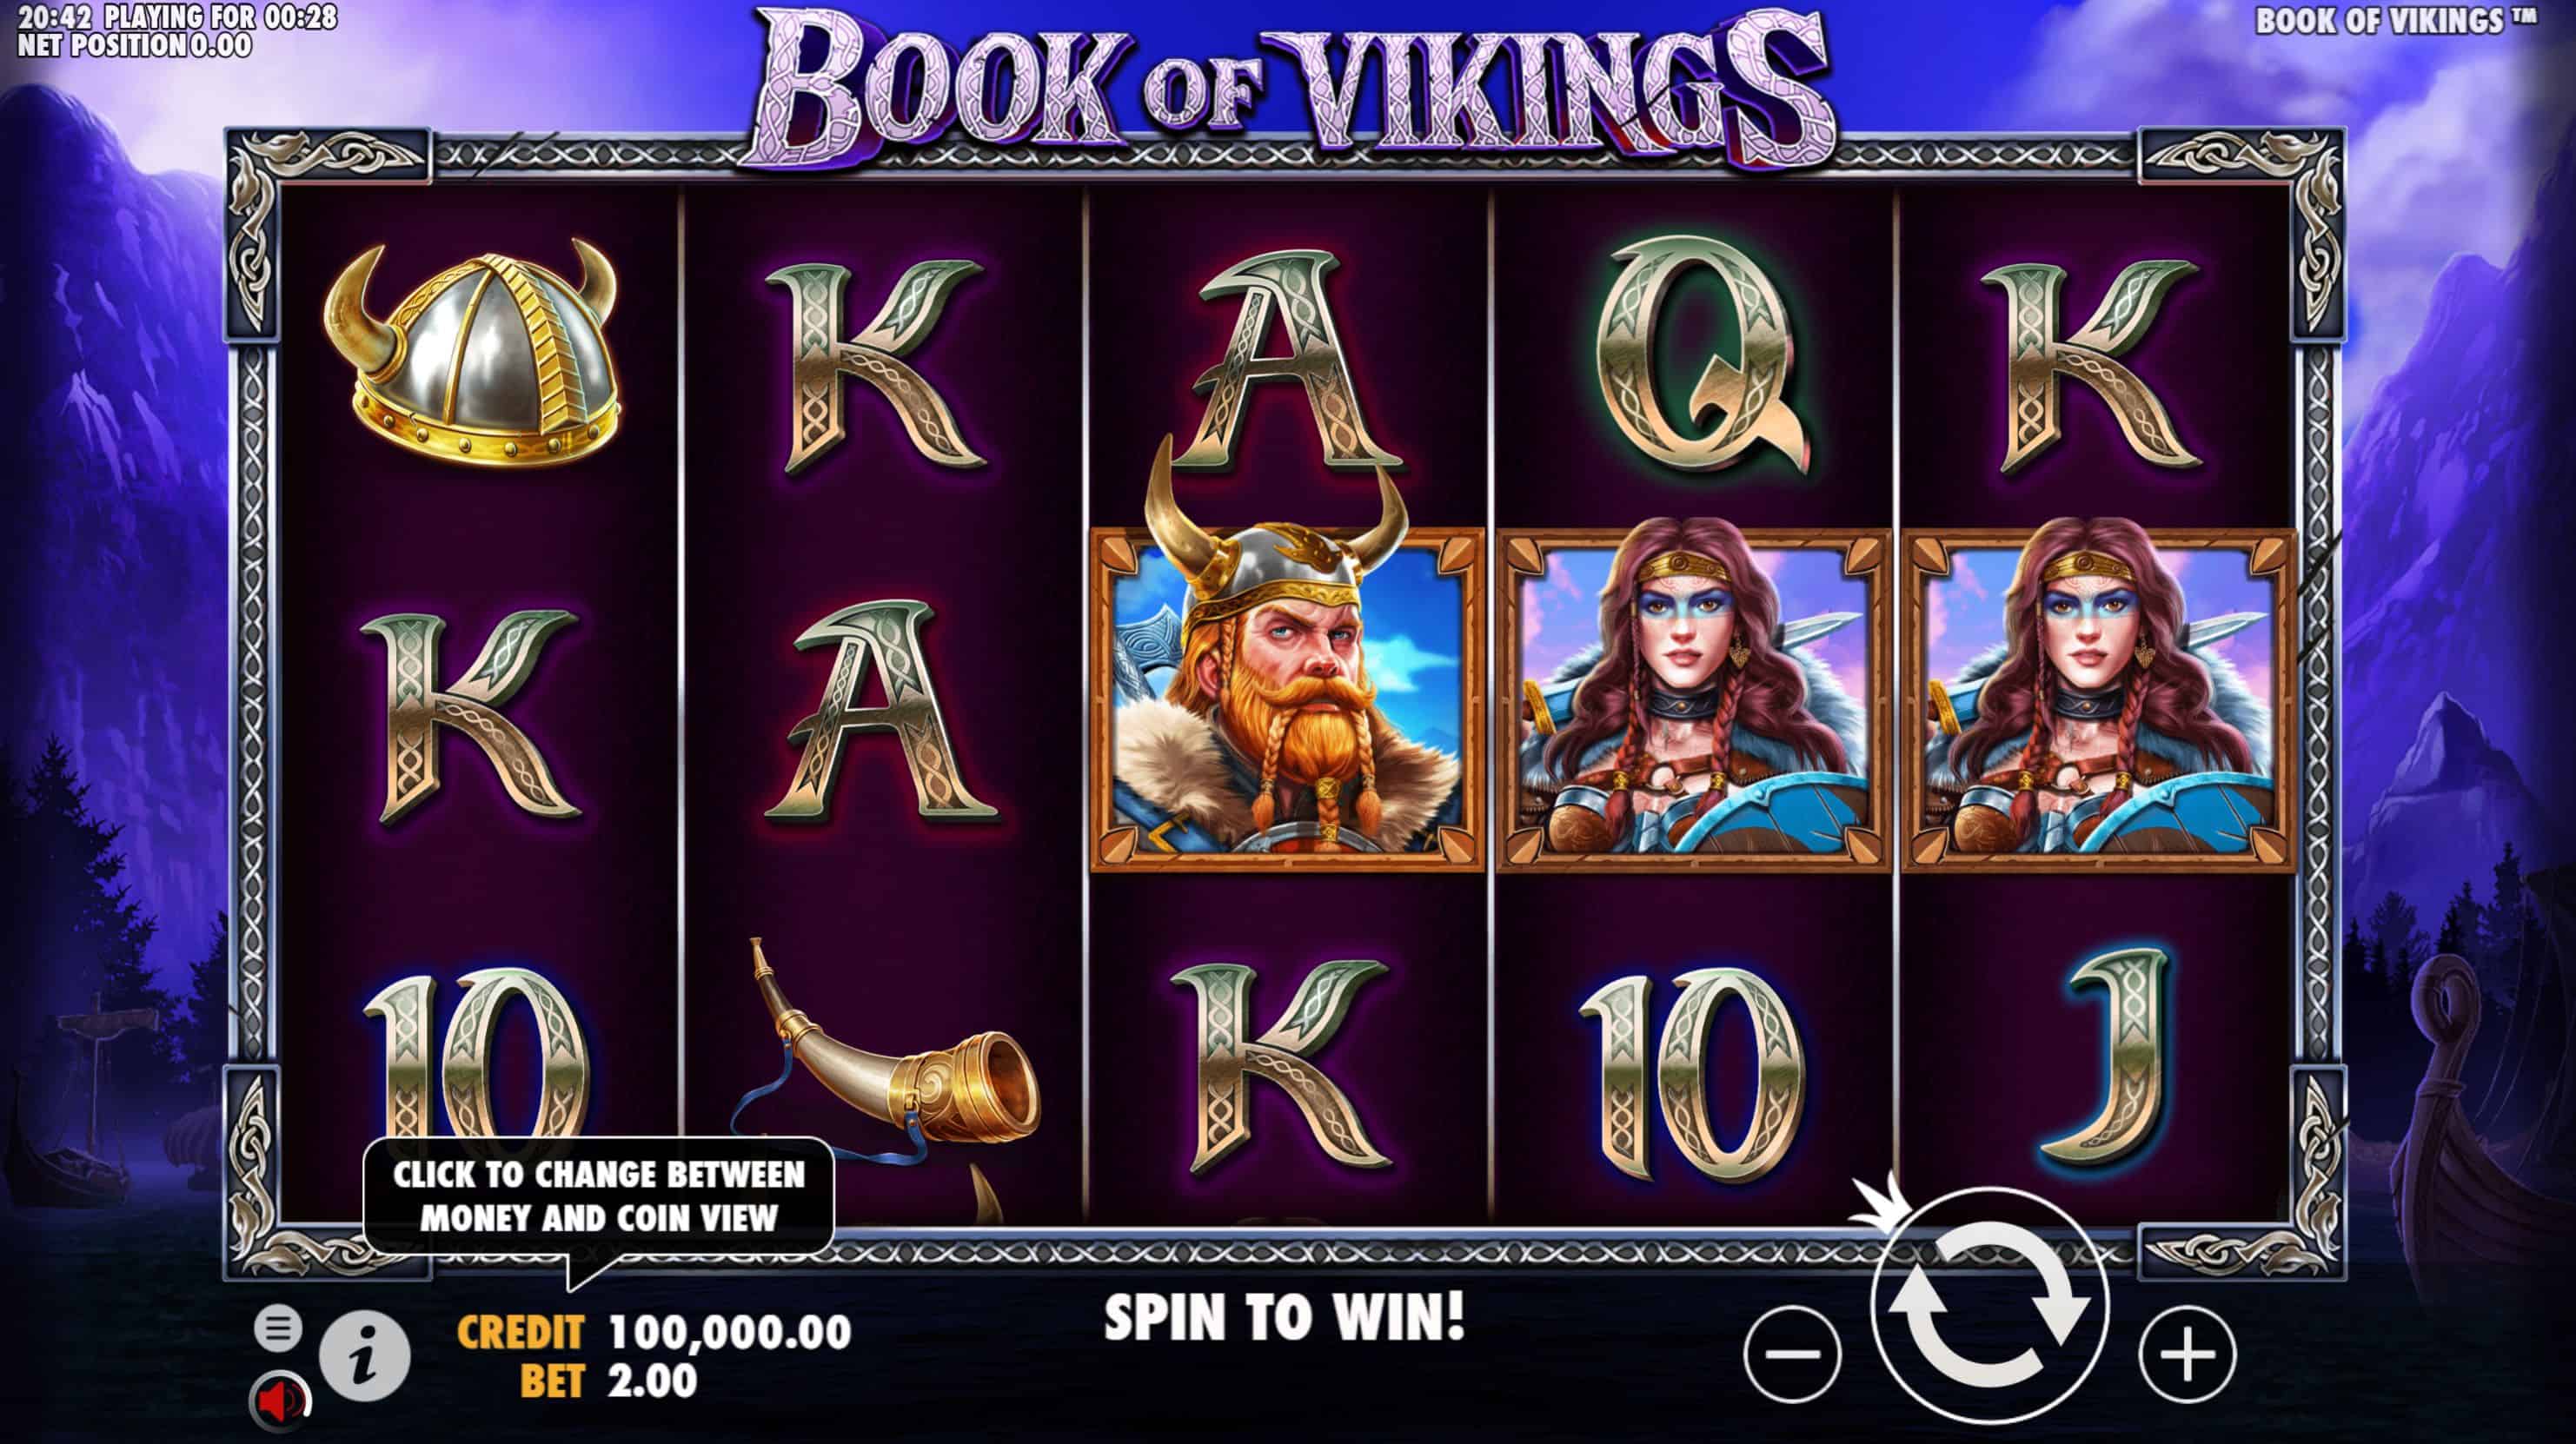 Book of Vikings Slot Game Free Play at Casino Ireland 01